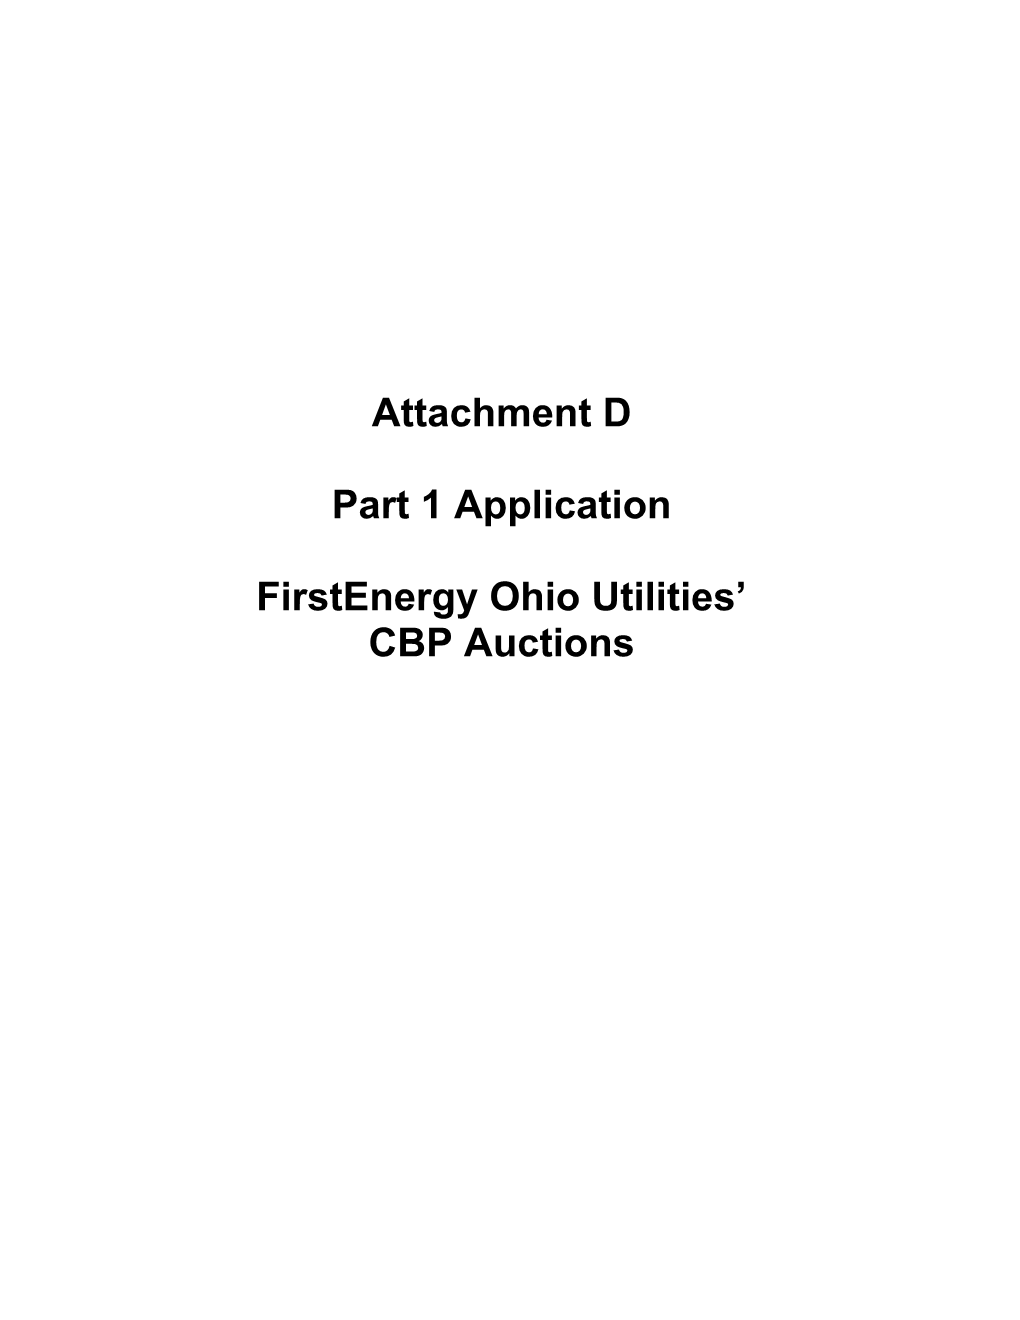 Part 1 Application: Firstenergy Ohio Utilities CBP Auctions